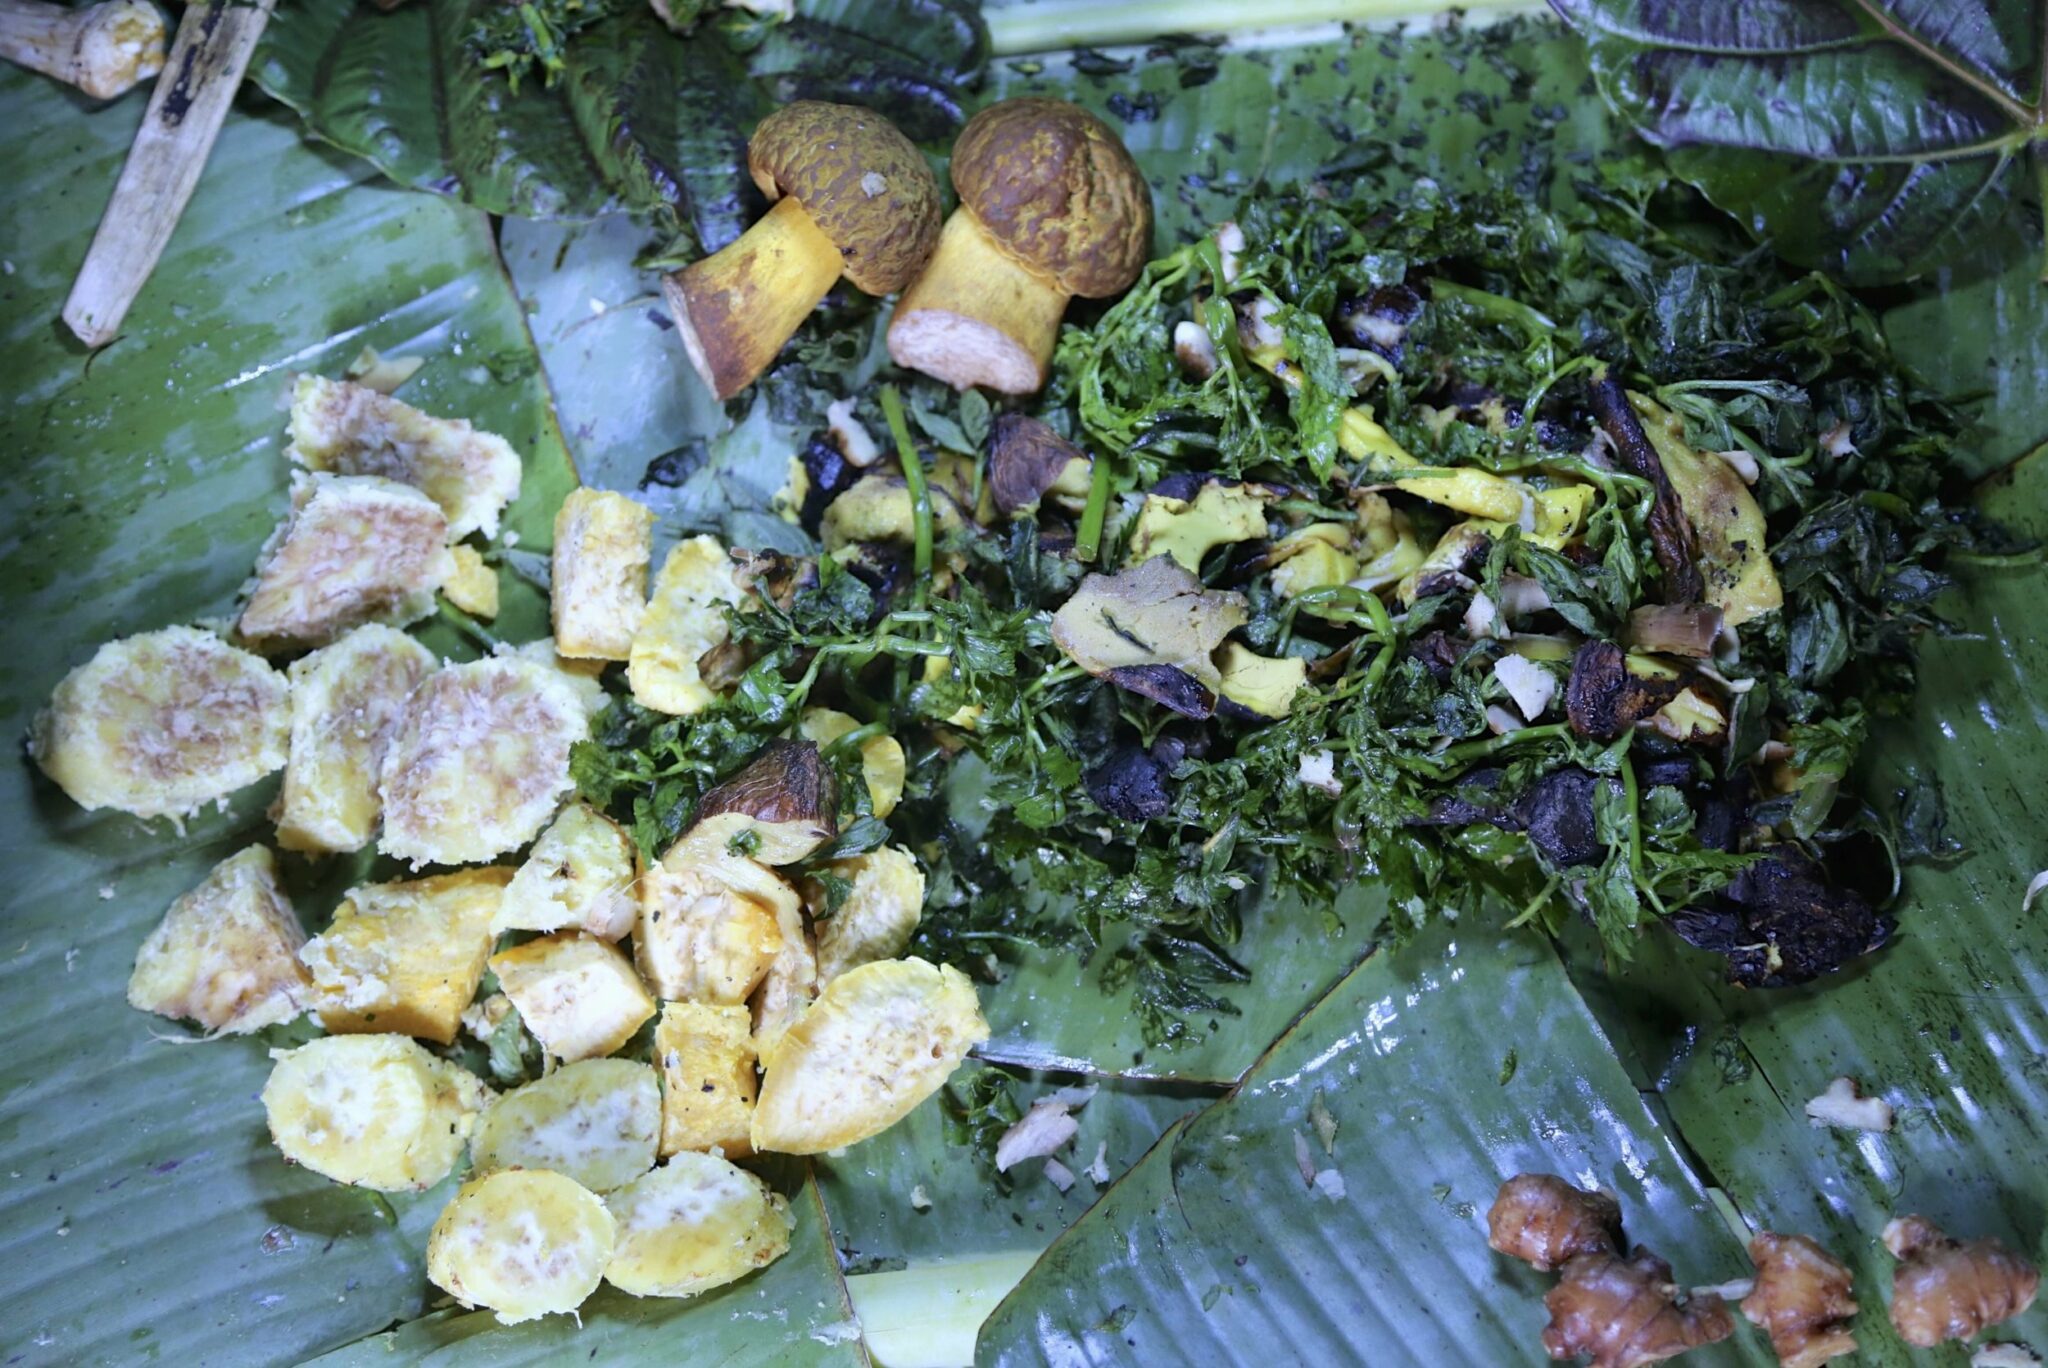 Wild mushrooms and sweet potatoes with bush ferns prepared in Solomon Islands